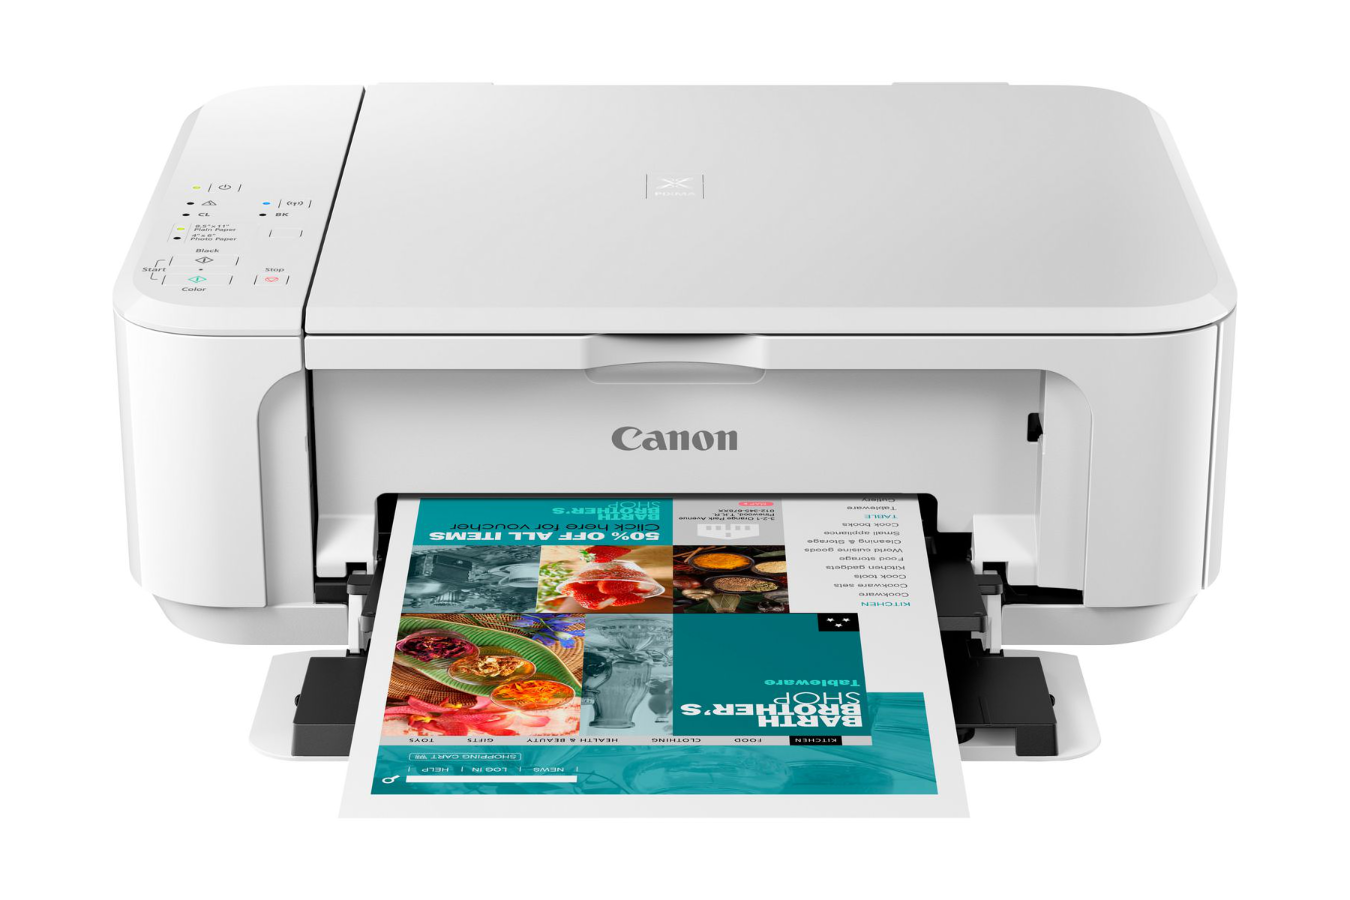 Canon Pixma MG3650 Printer Review – Premium Inks